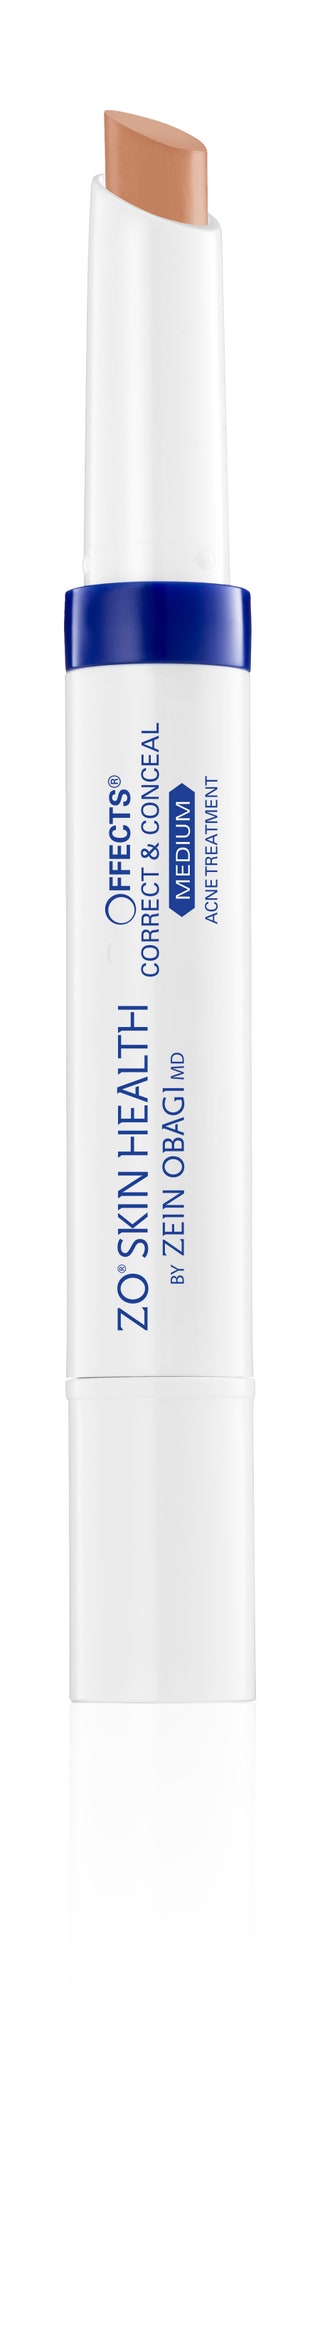 Zo Skin Health корректор и консилер  для кожи с акне Offects Correct  Conceal Acne Treatment  1876 руб. Компактный стик...